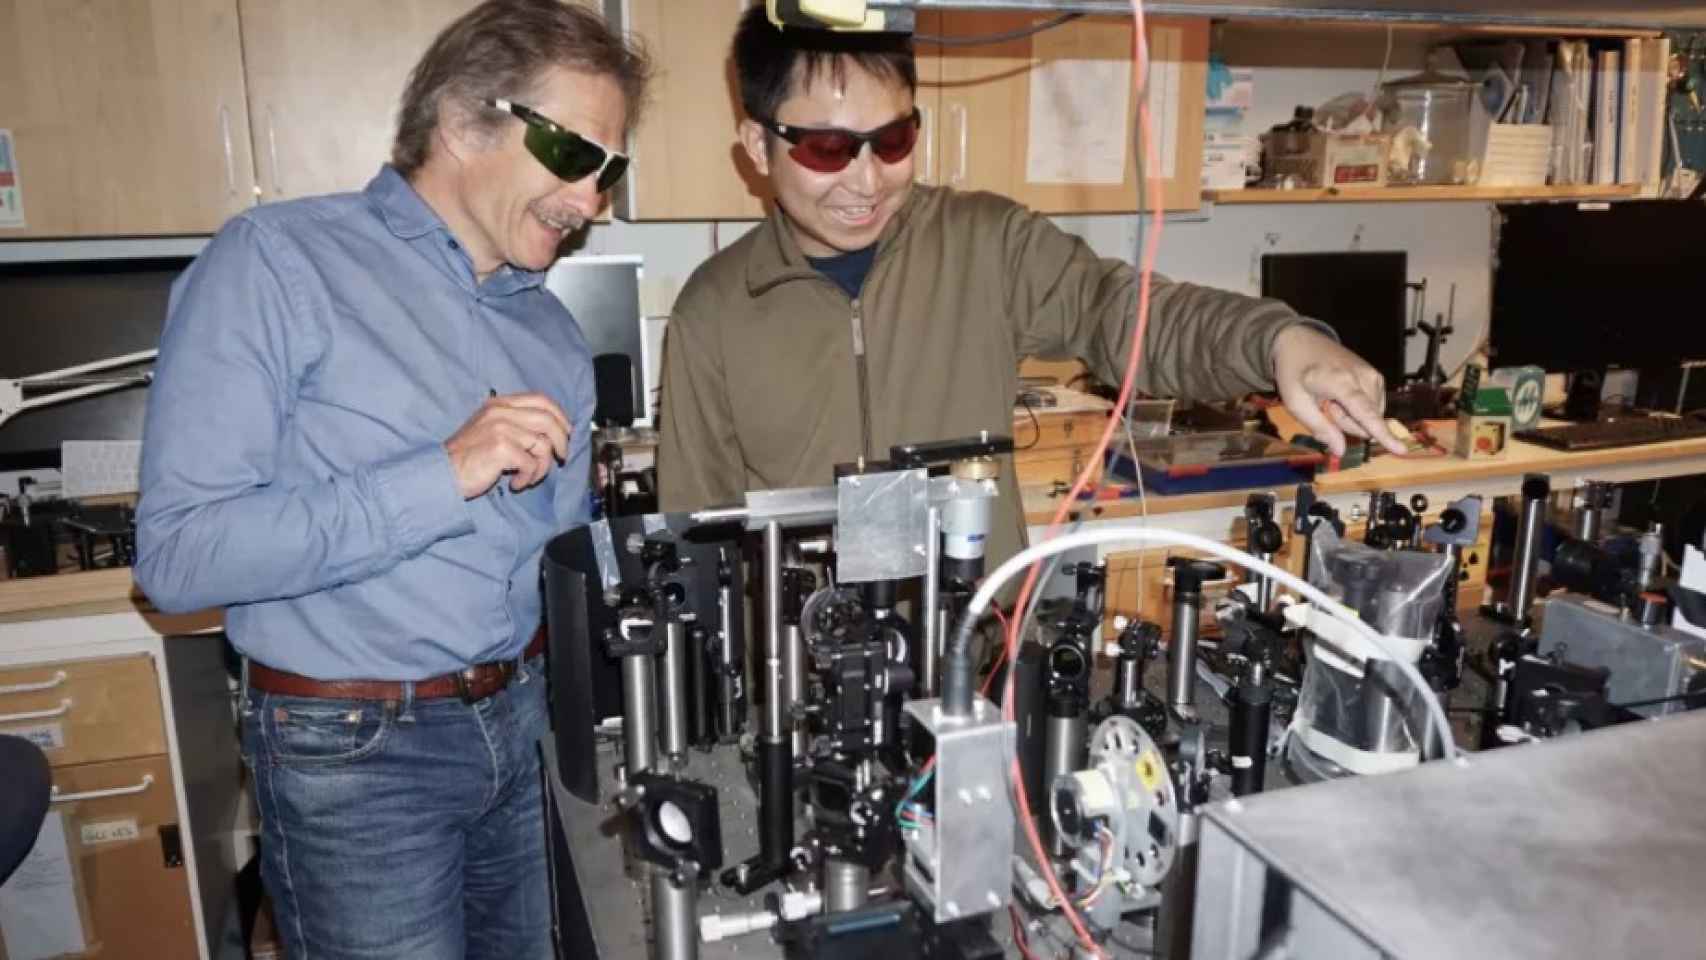 Tönu Pullerits y Kaibo Zheng durante la configuración de espectroscopia láser utilizada para esta investigación.